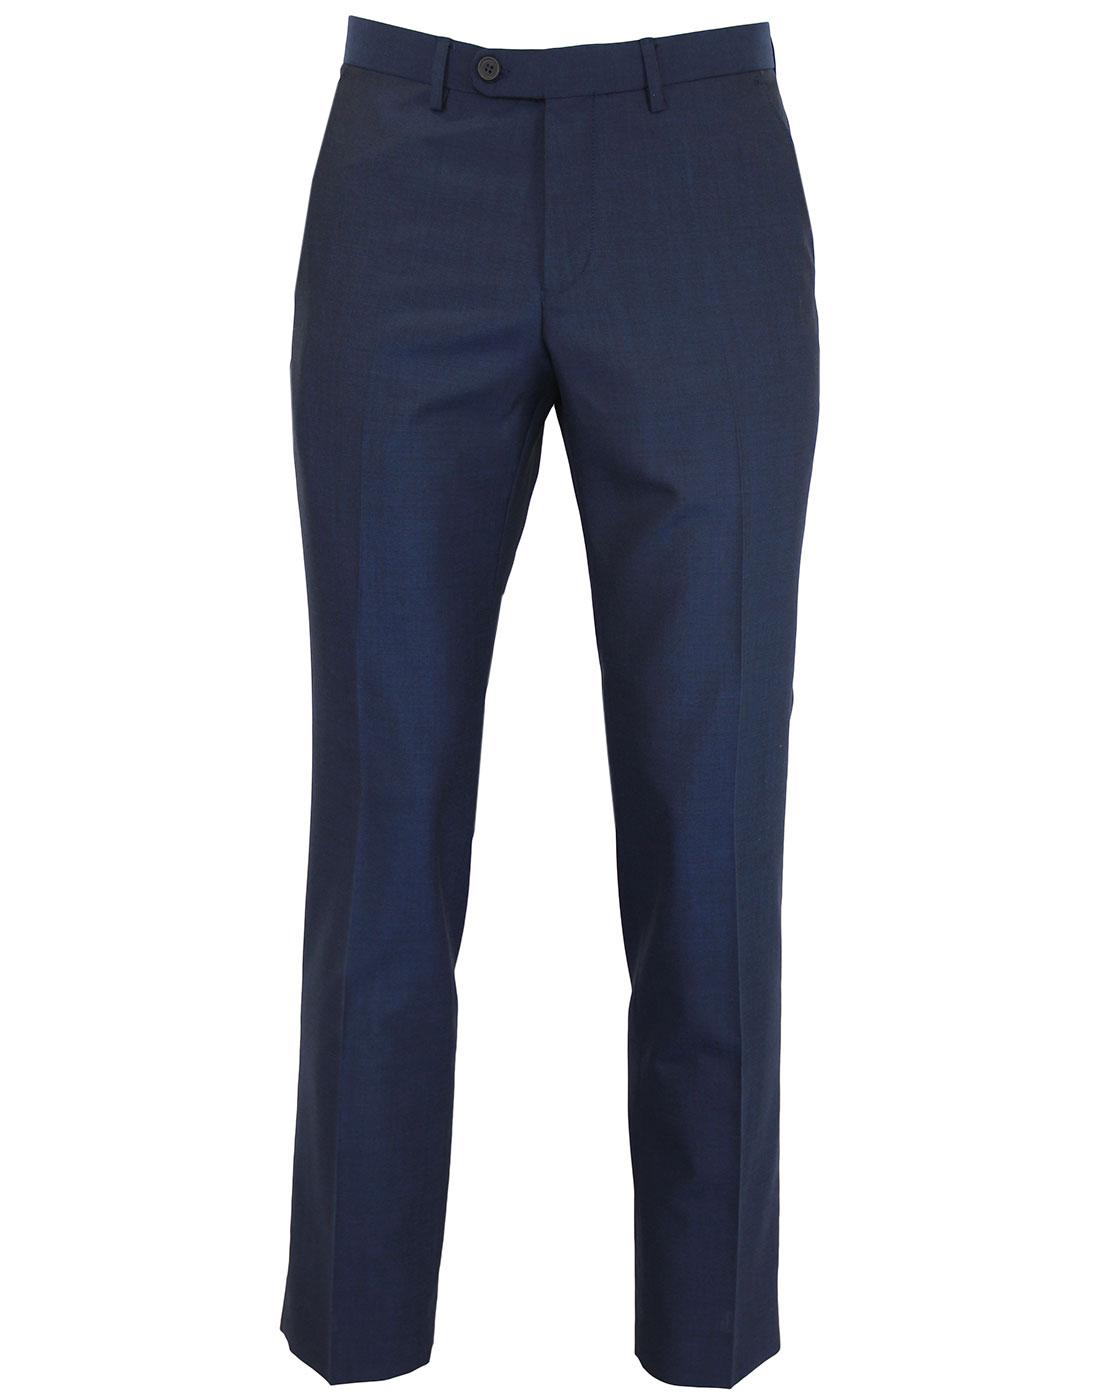 Retro 60s Mod Slim Fit Ink Blue Tailored Suit Trousers